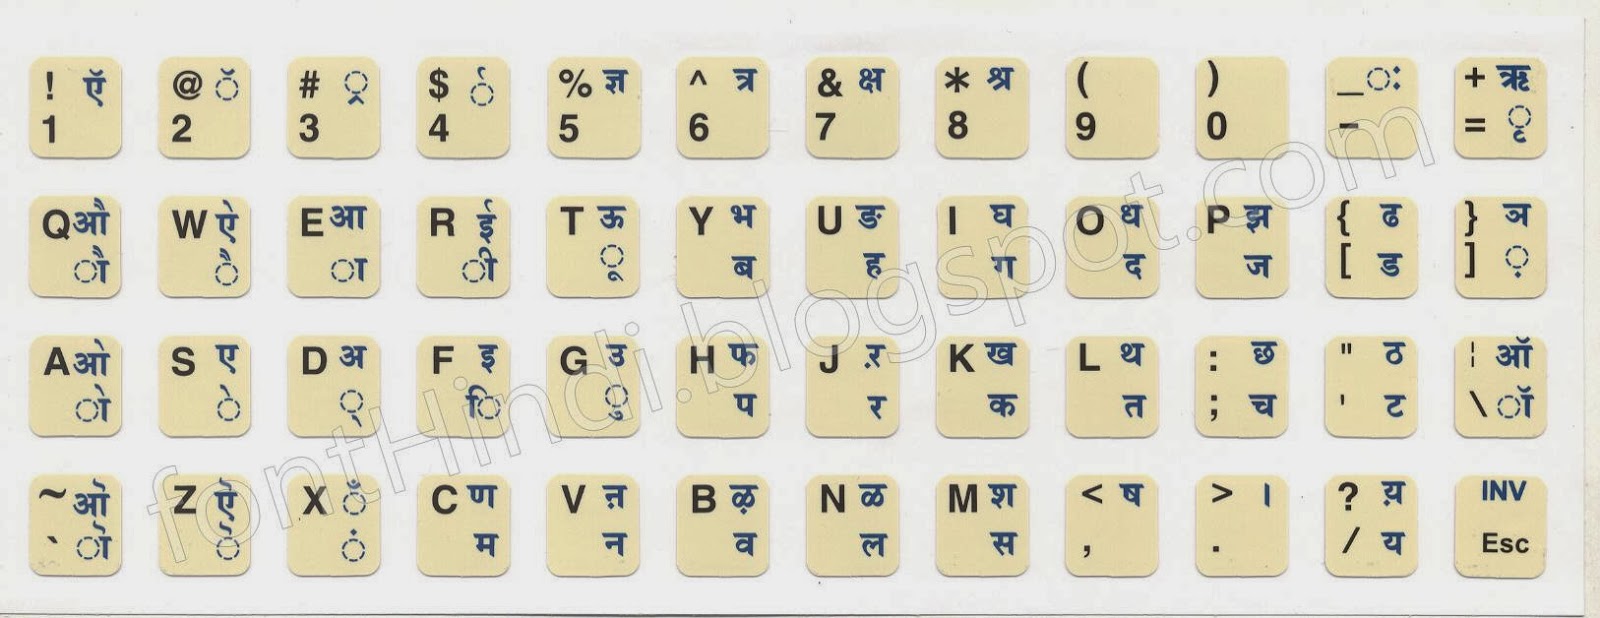 INscript Keyboard Layout for Devanagari font